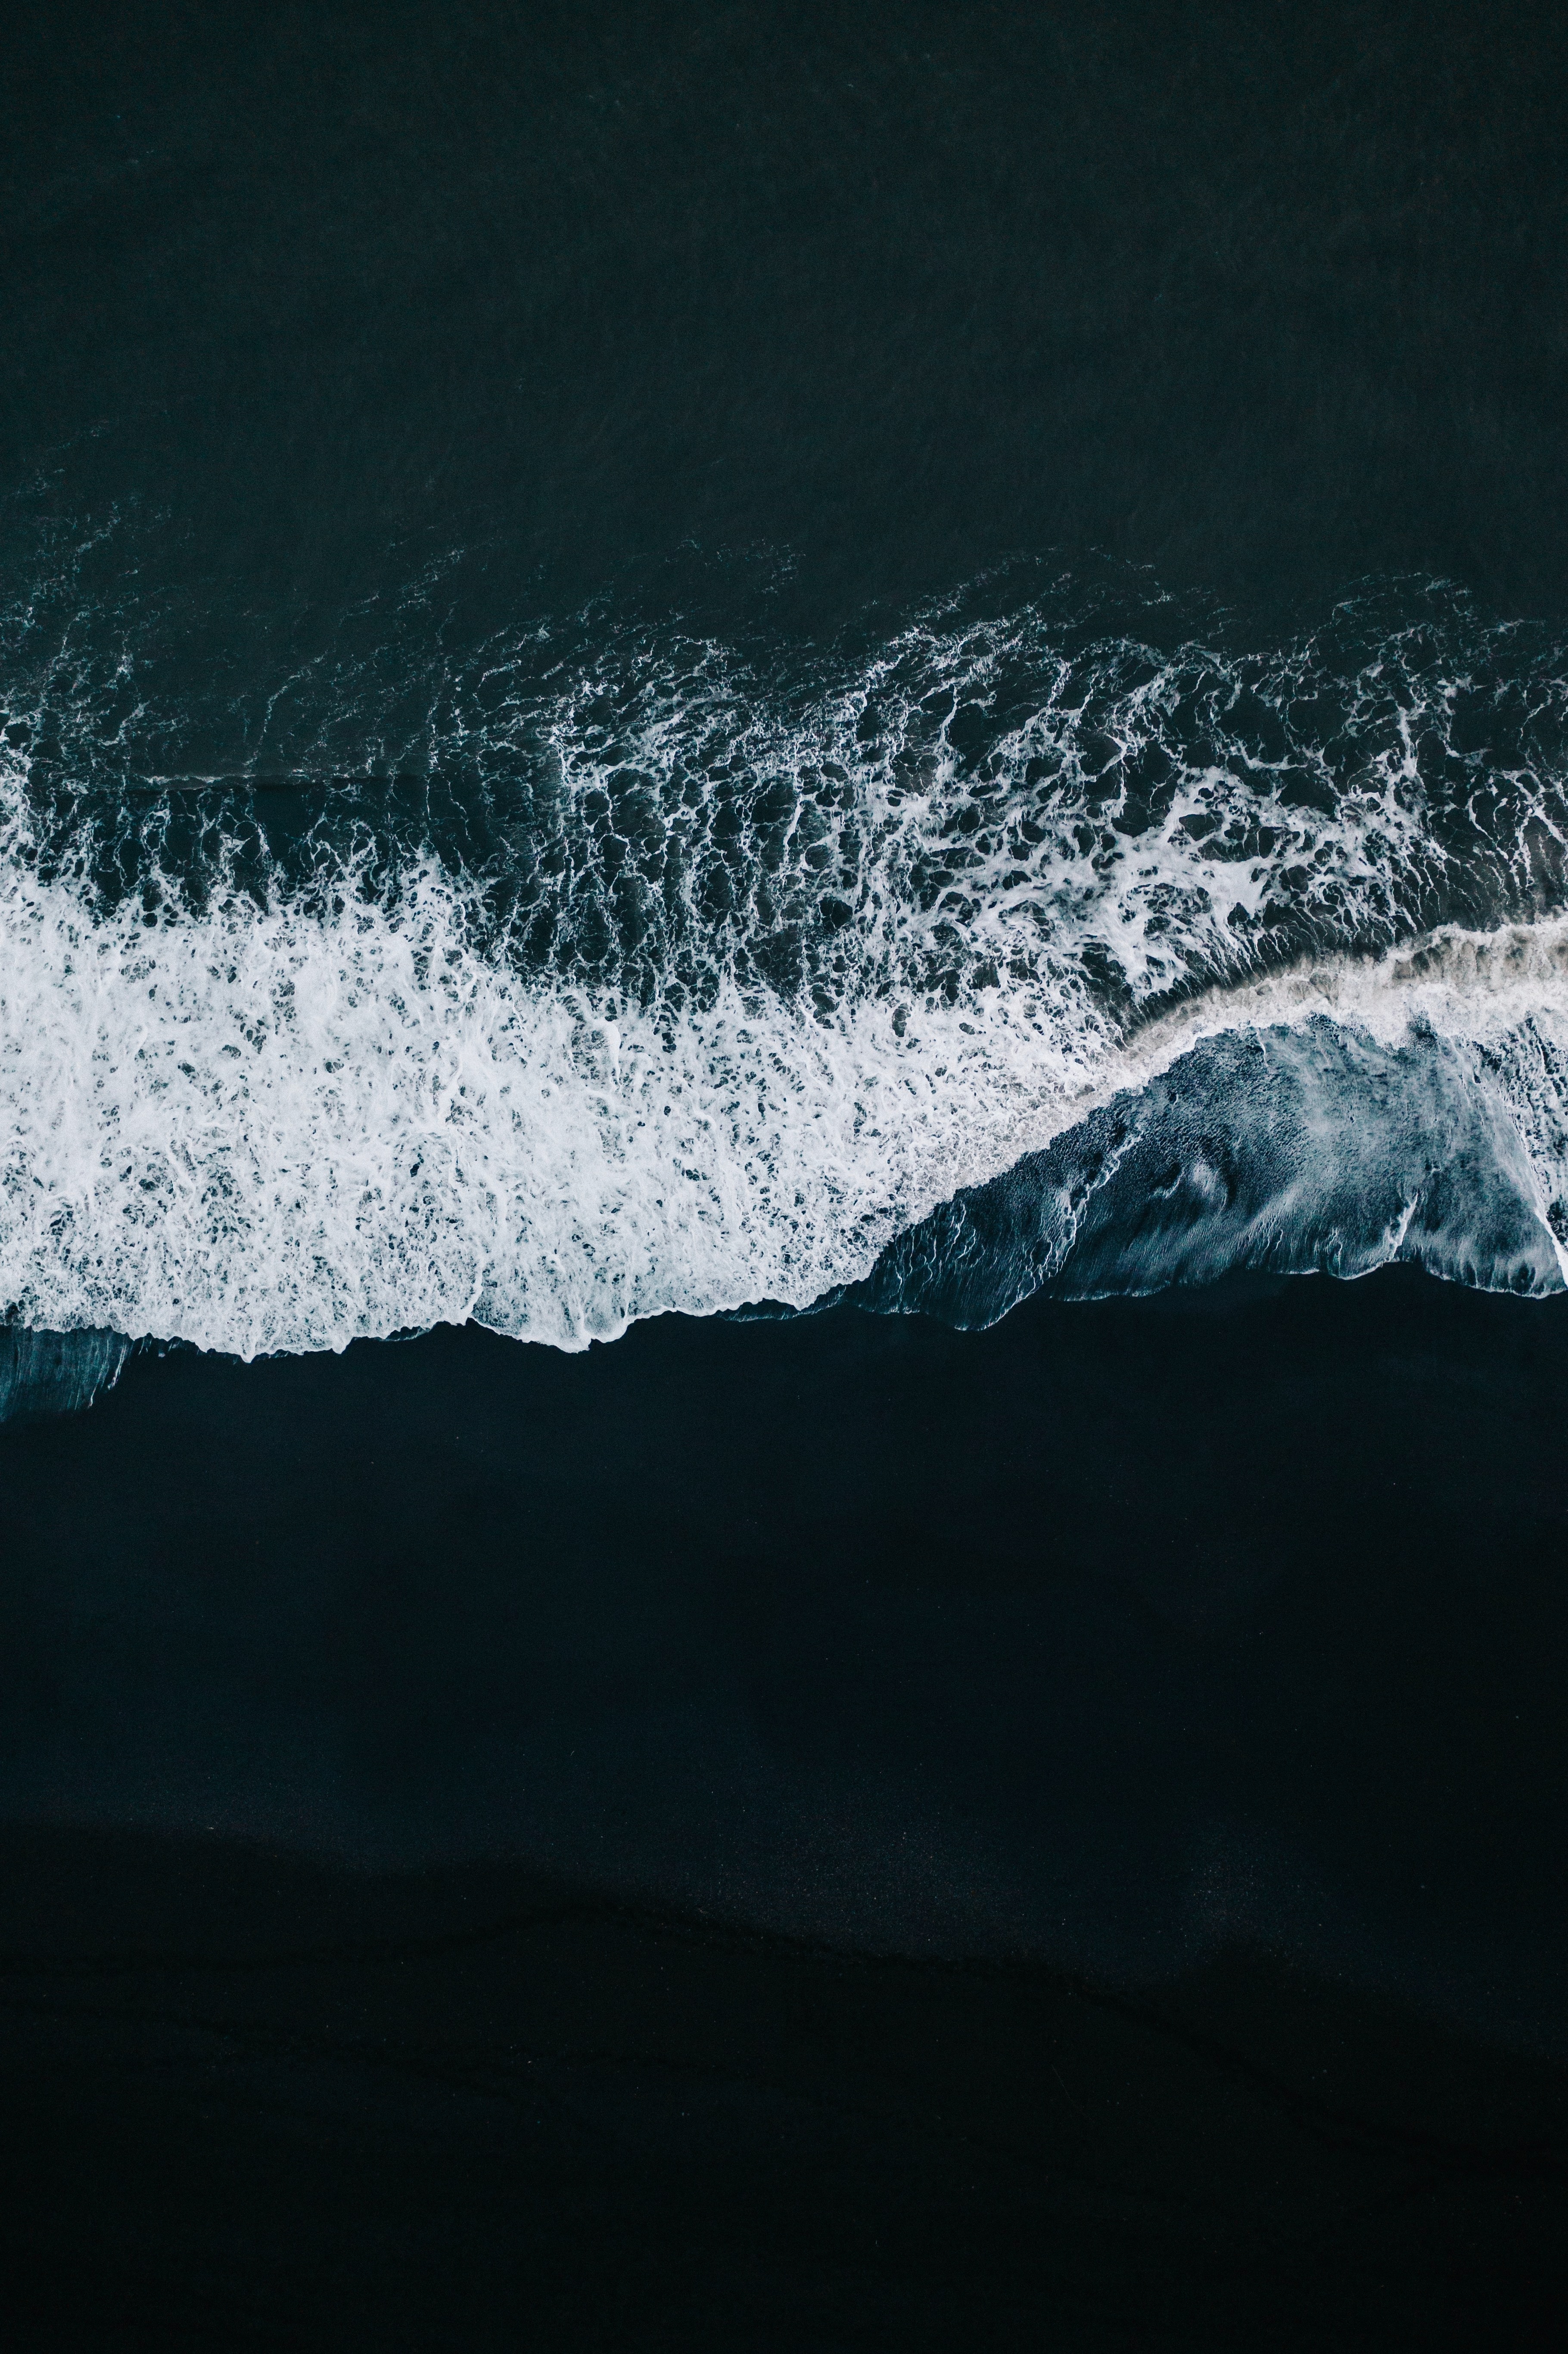 148606 descargar imagen naturaleza, mar, ondas, playa, vista desde arriba, navegar, surfear: fondos de pantalla y protectores de pantalla gratis